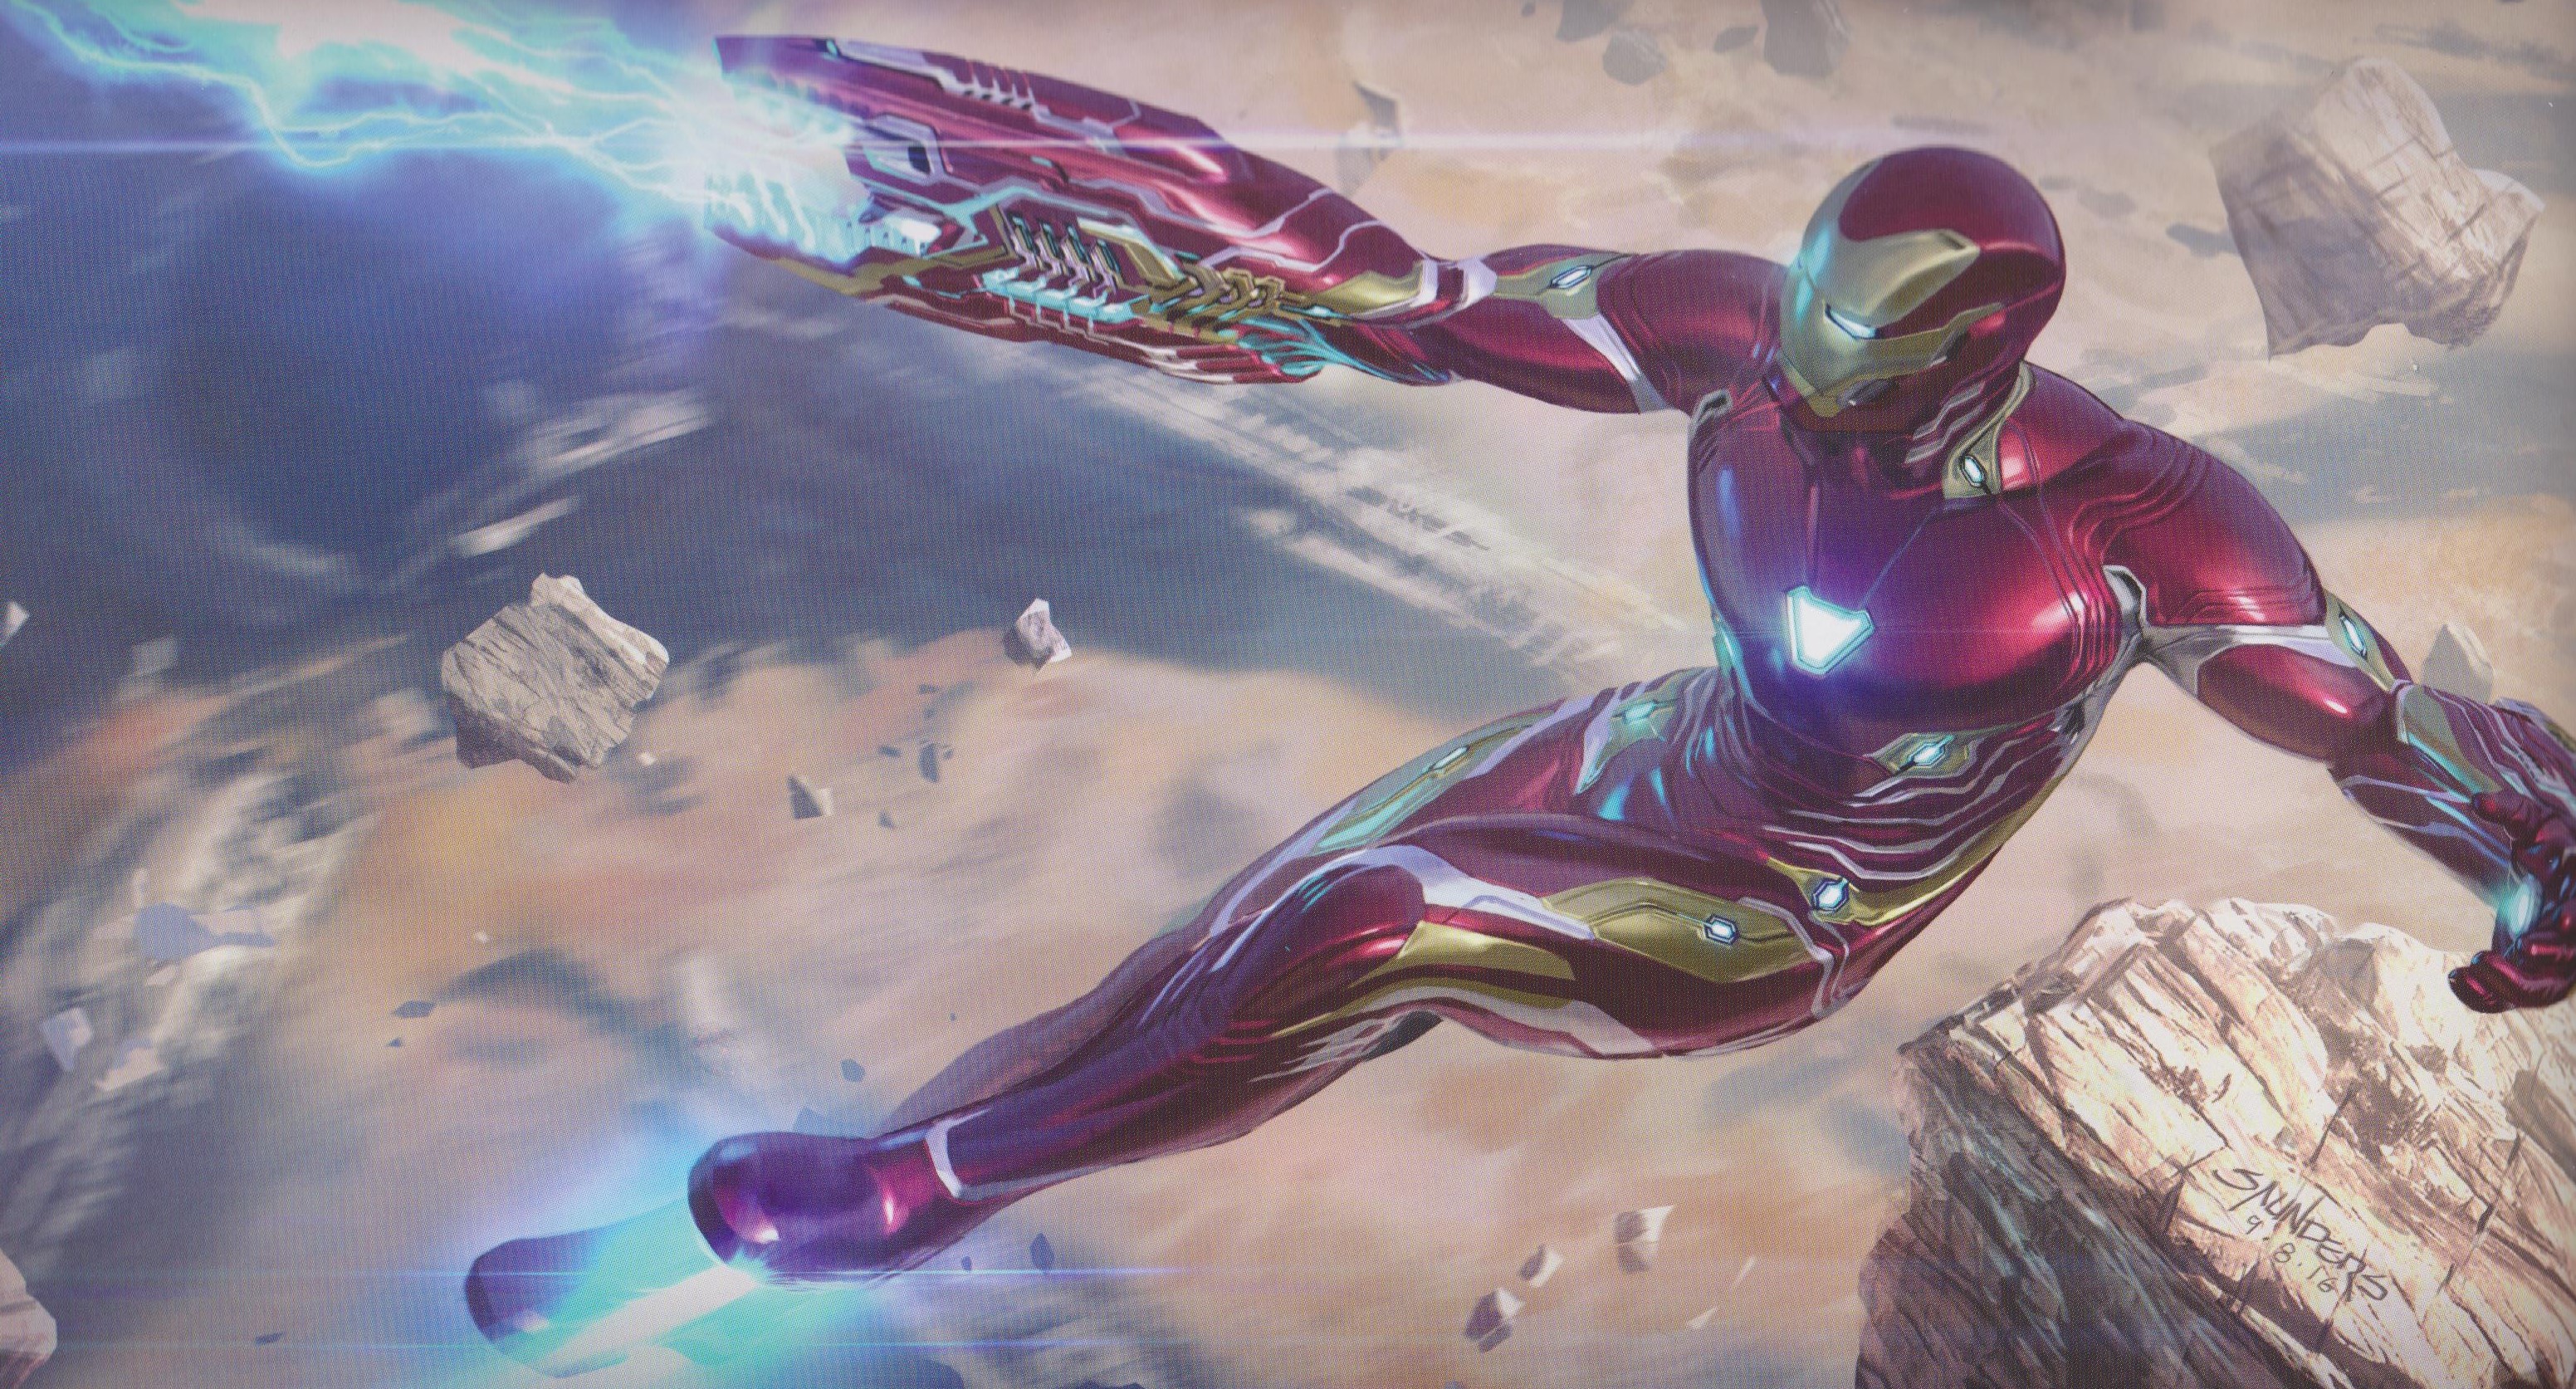  Iron  Man  Concept Art HD  Superheroes 4k Wallpapers  